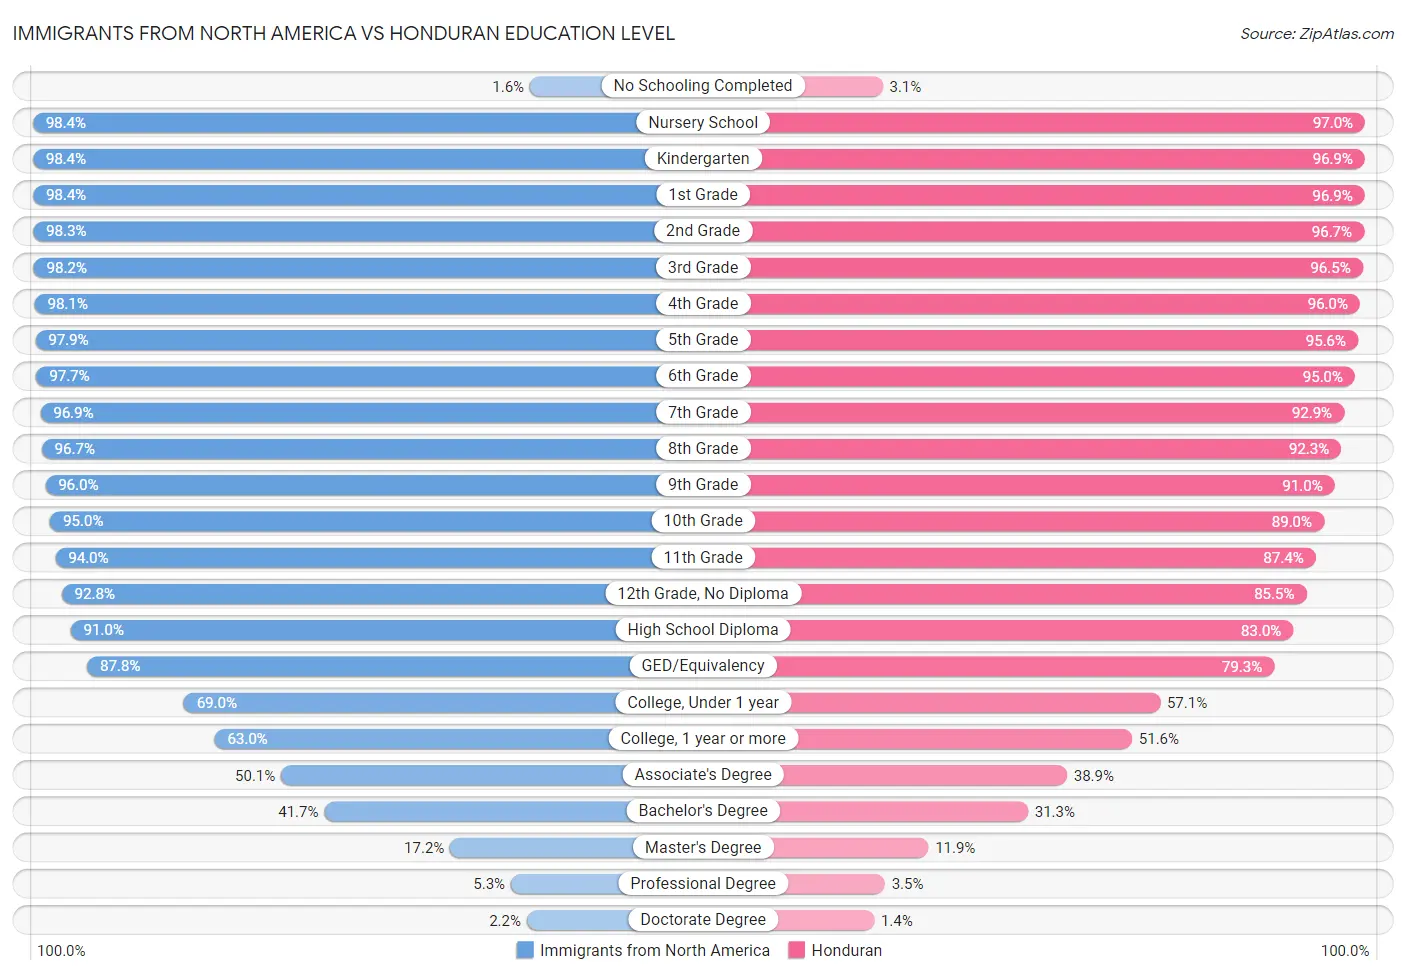 Immigrants from North America vs Honduran Education Level